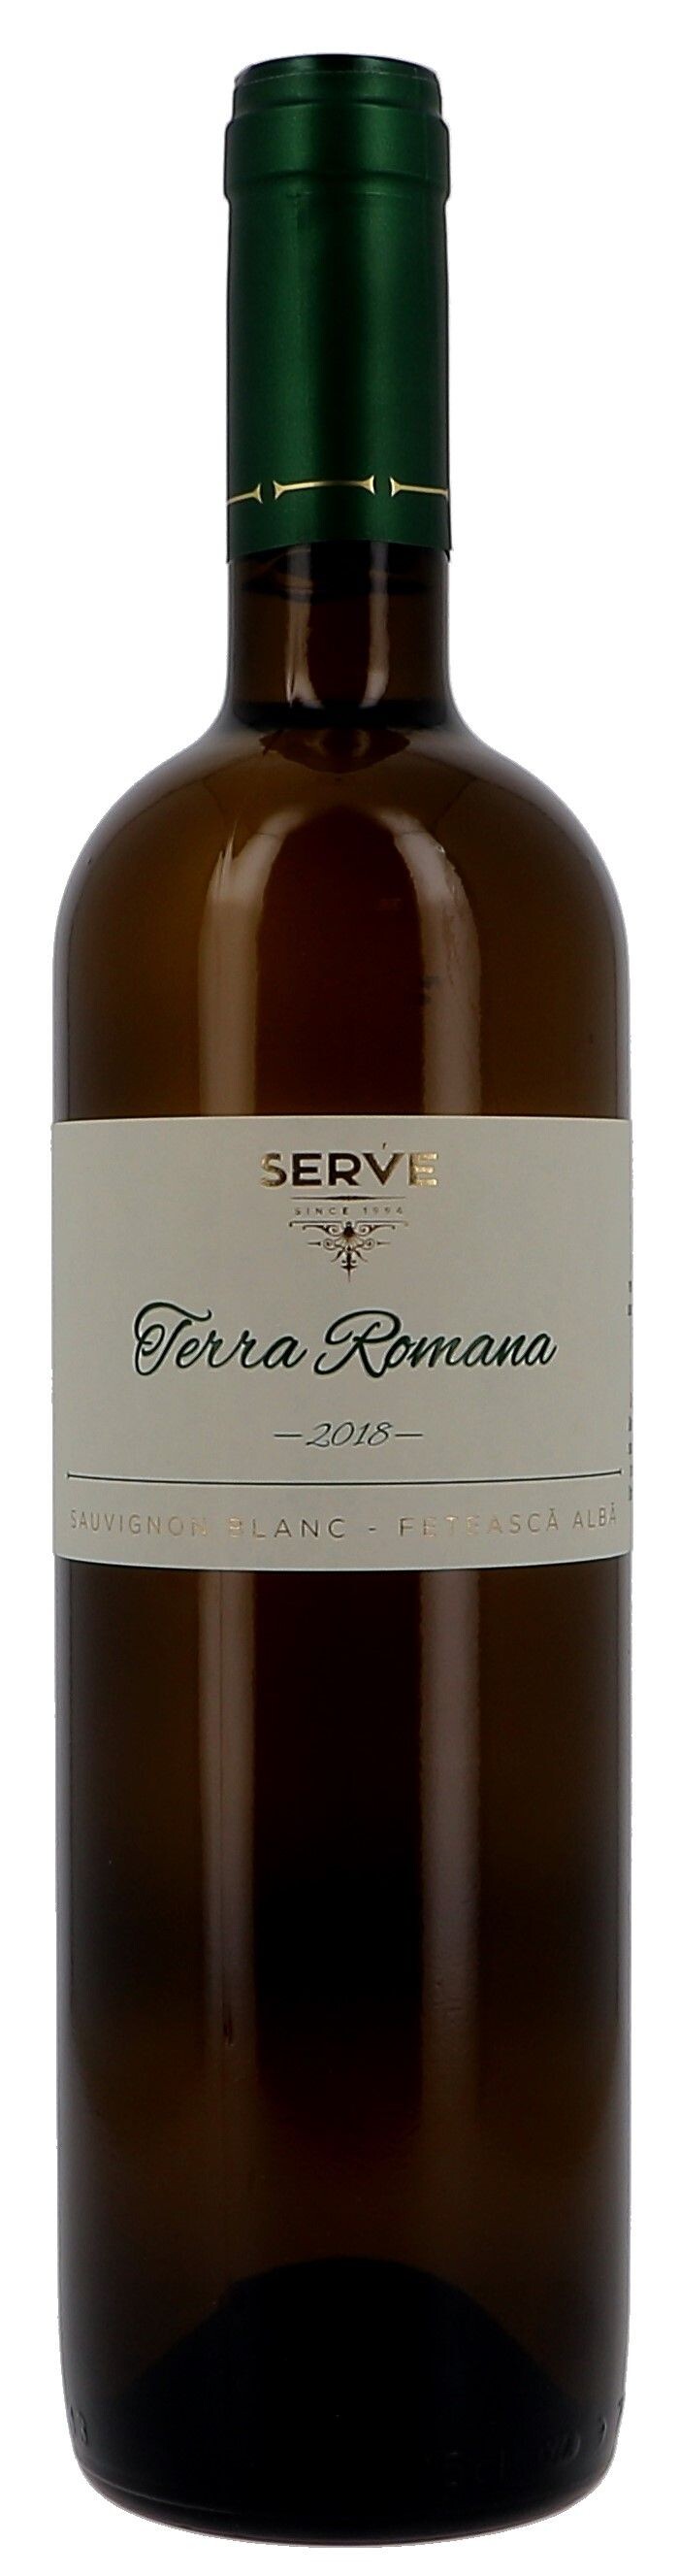 Serve Terra Romana Sauvignon Blanc / Feteasca Alba 75cl Roemenie - Wine